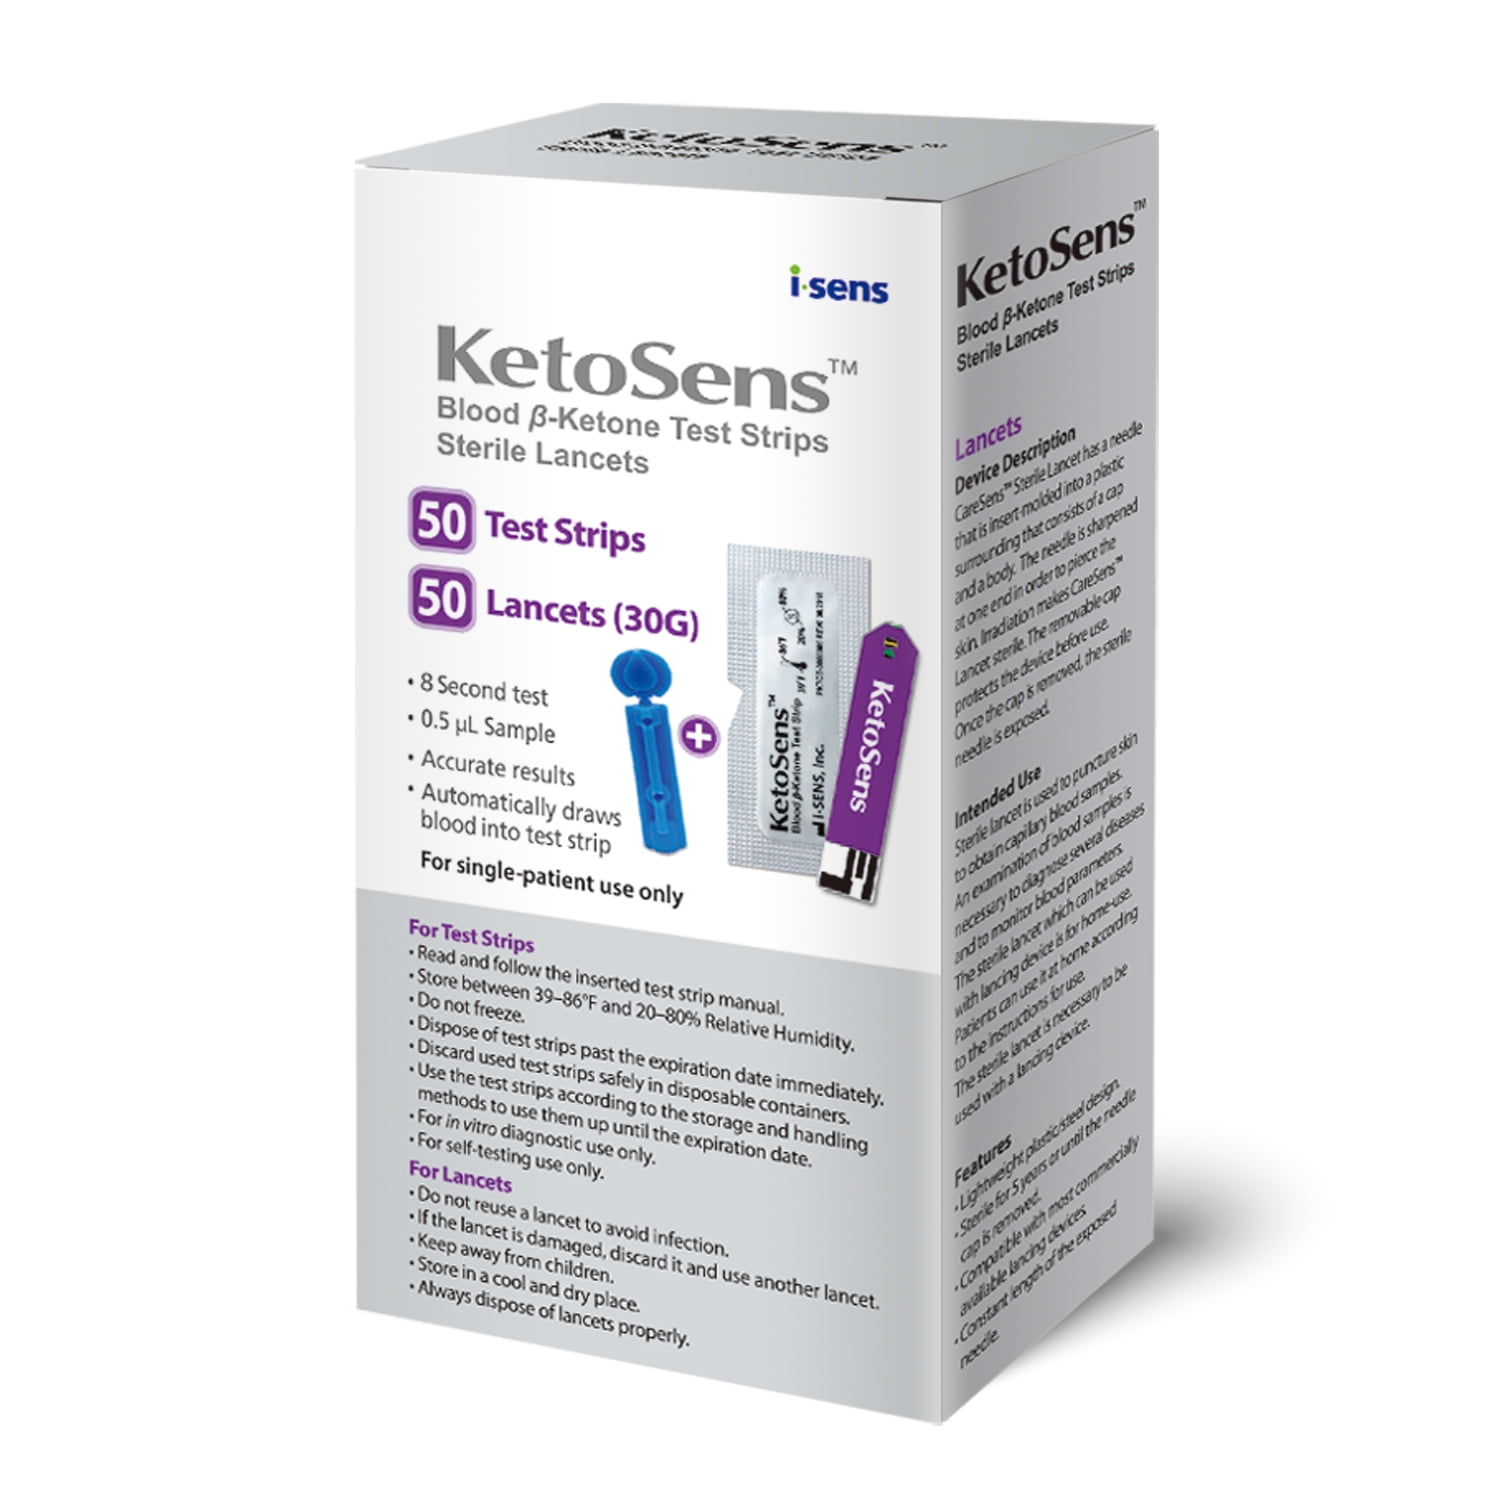 KetoSens Blood Ketone Test Strips and Lancets - 50 Test Strips & 50 Lancets  - for Keto Diet and Ketosis Monitoring 